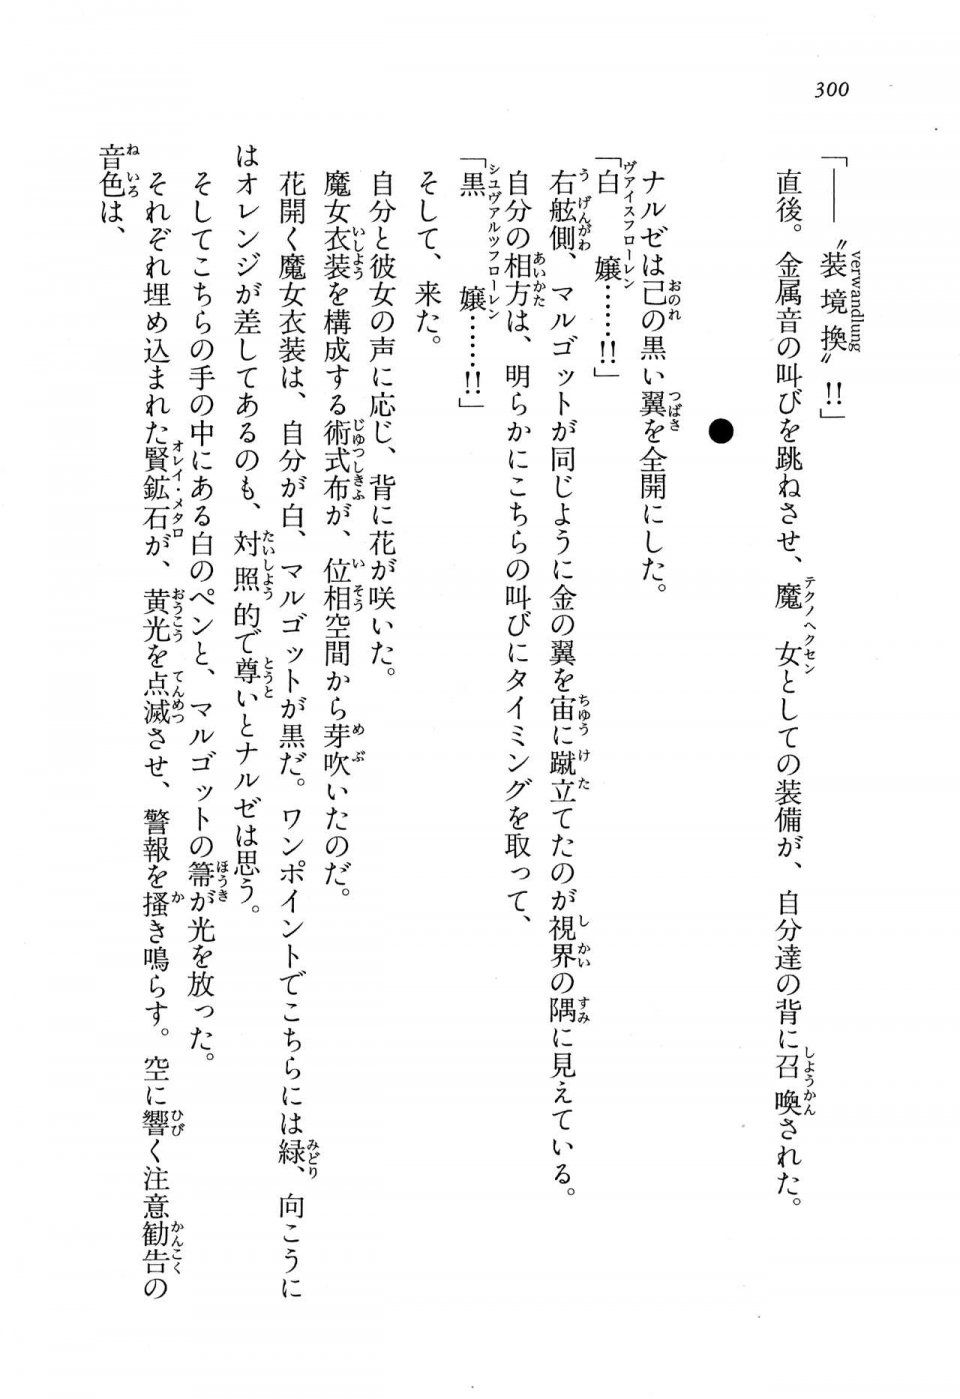 Kyoukai Senjou no Horizon BD Special Mininovel Vol 8(4B) - Photo #304